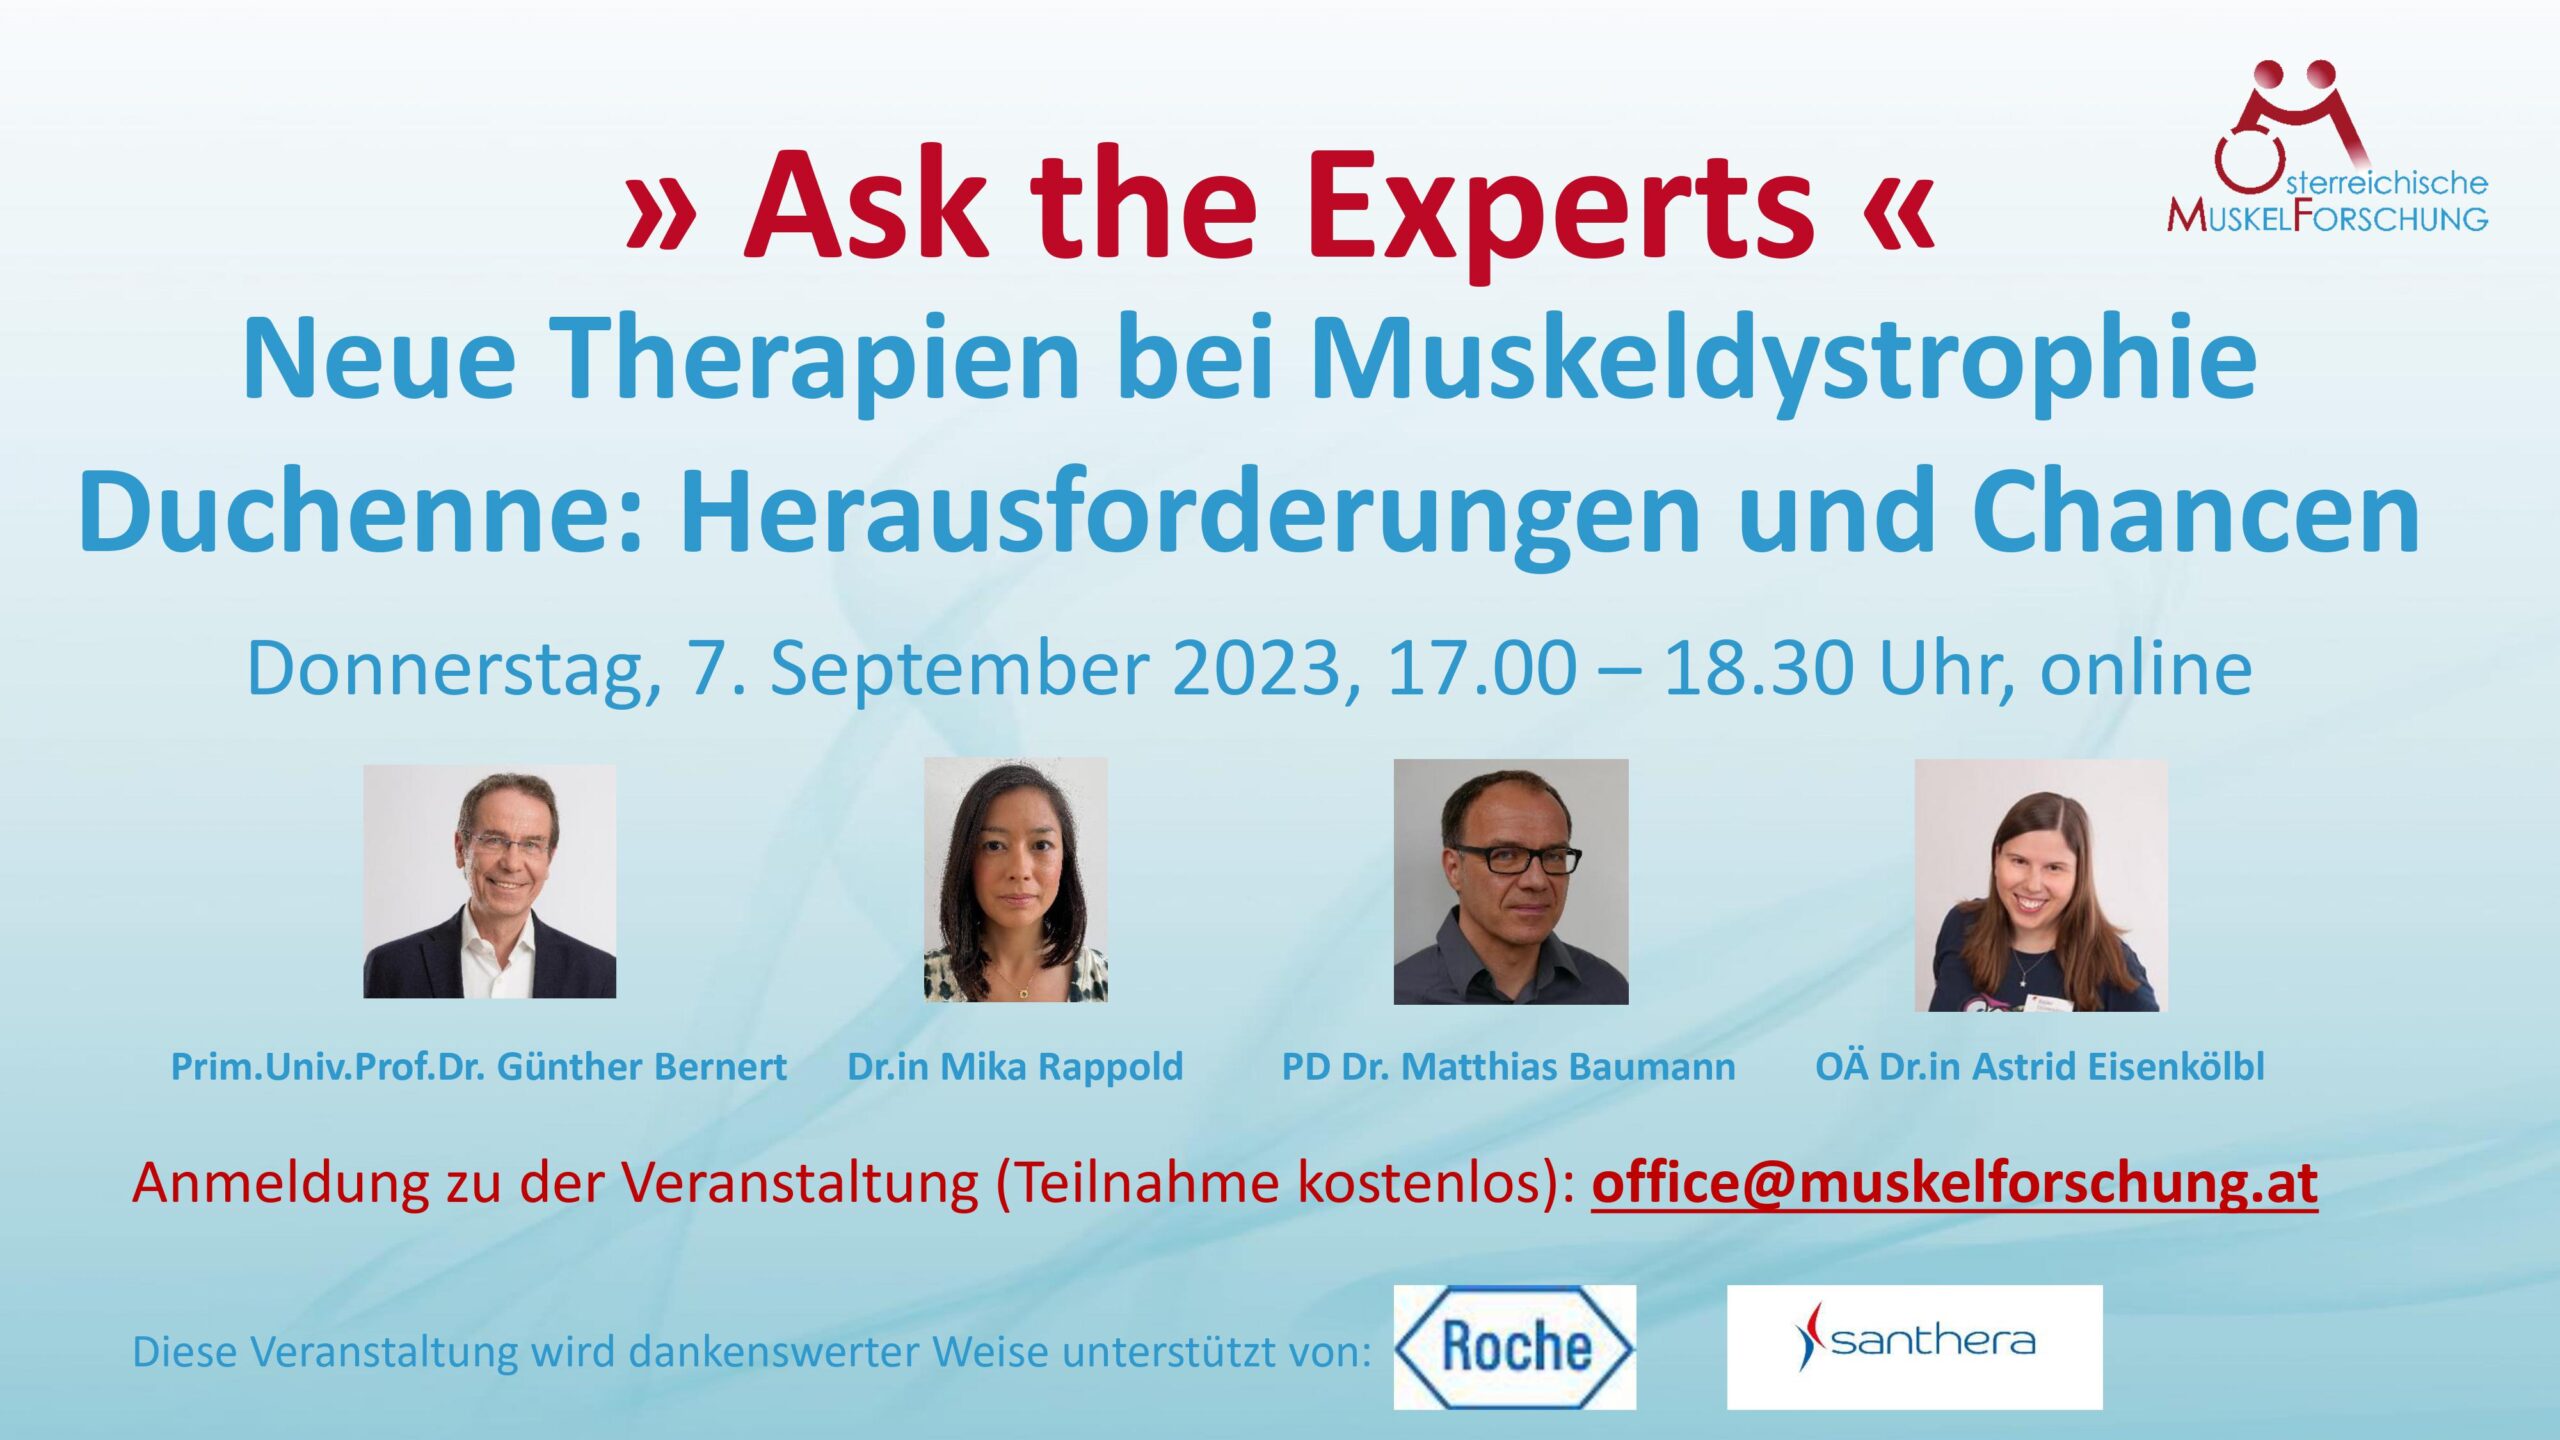 „Ask the Experts: Neue Therapien bei DMD“, 7.9.2023, 17.00 Uhr, online